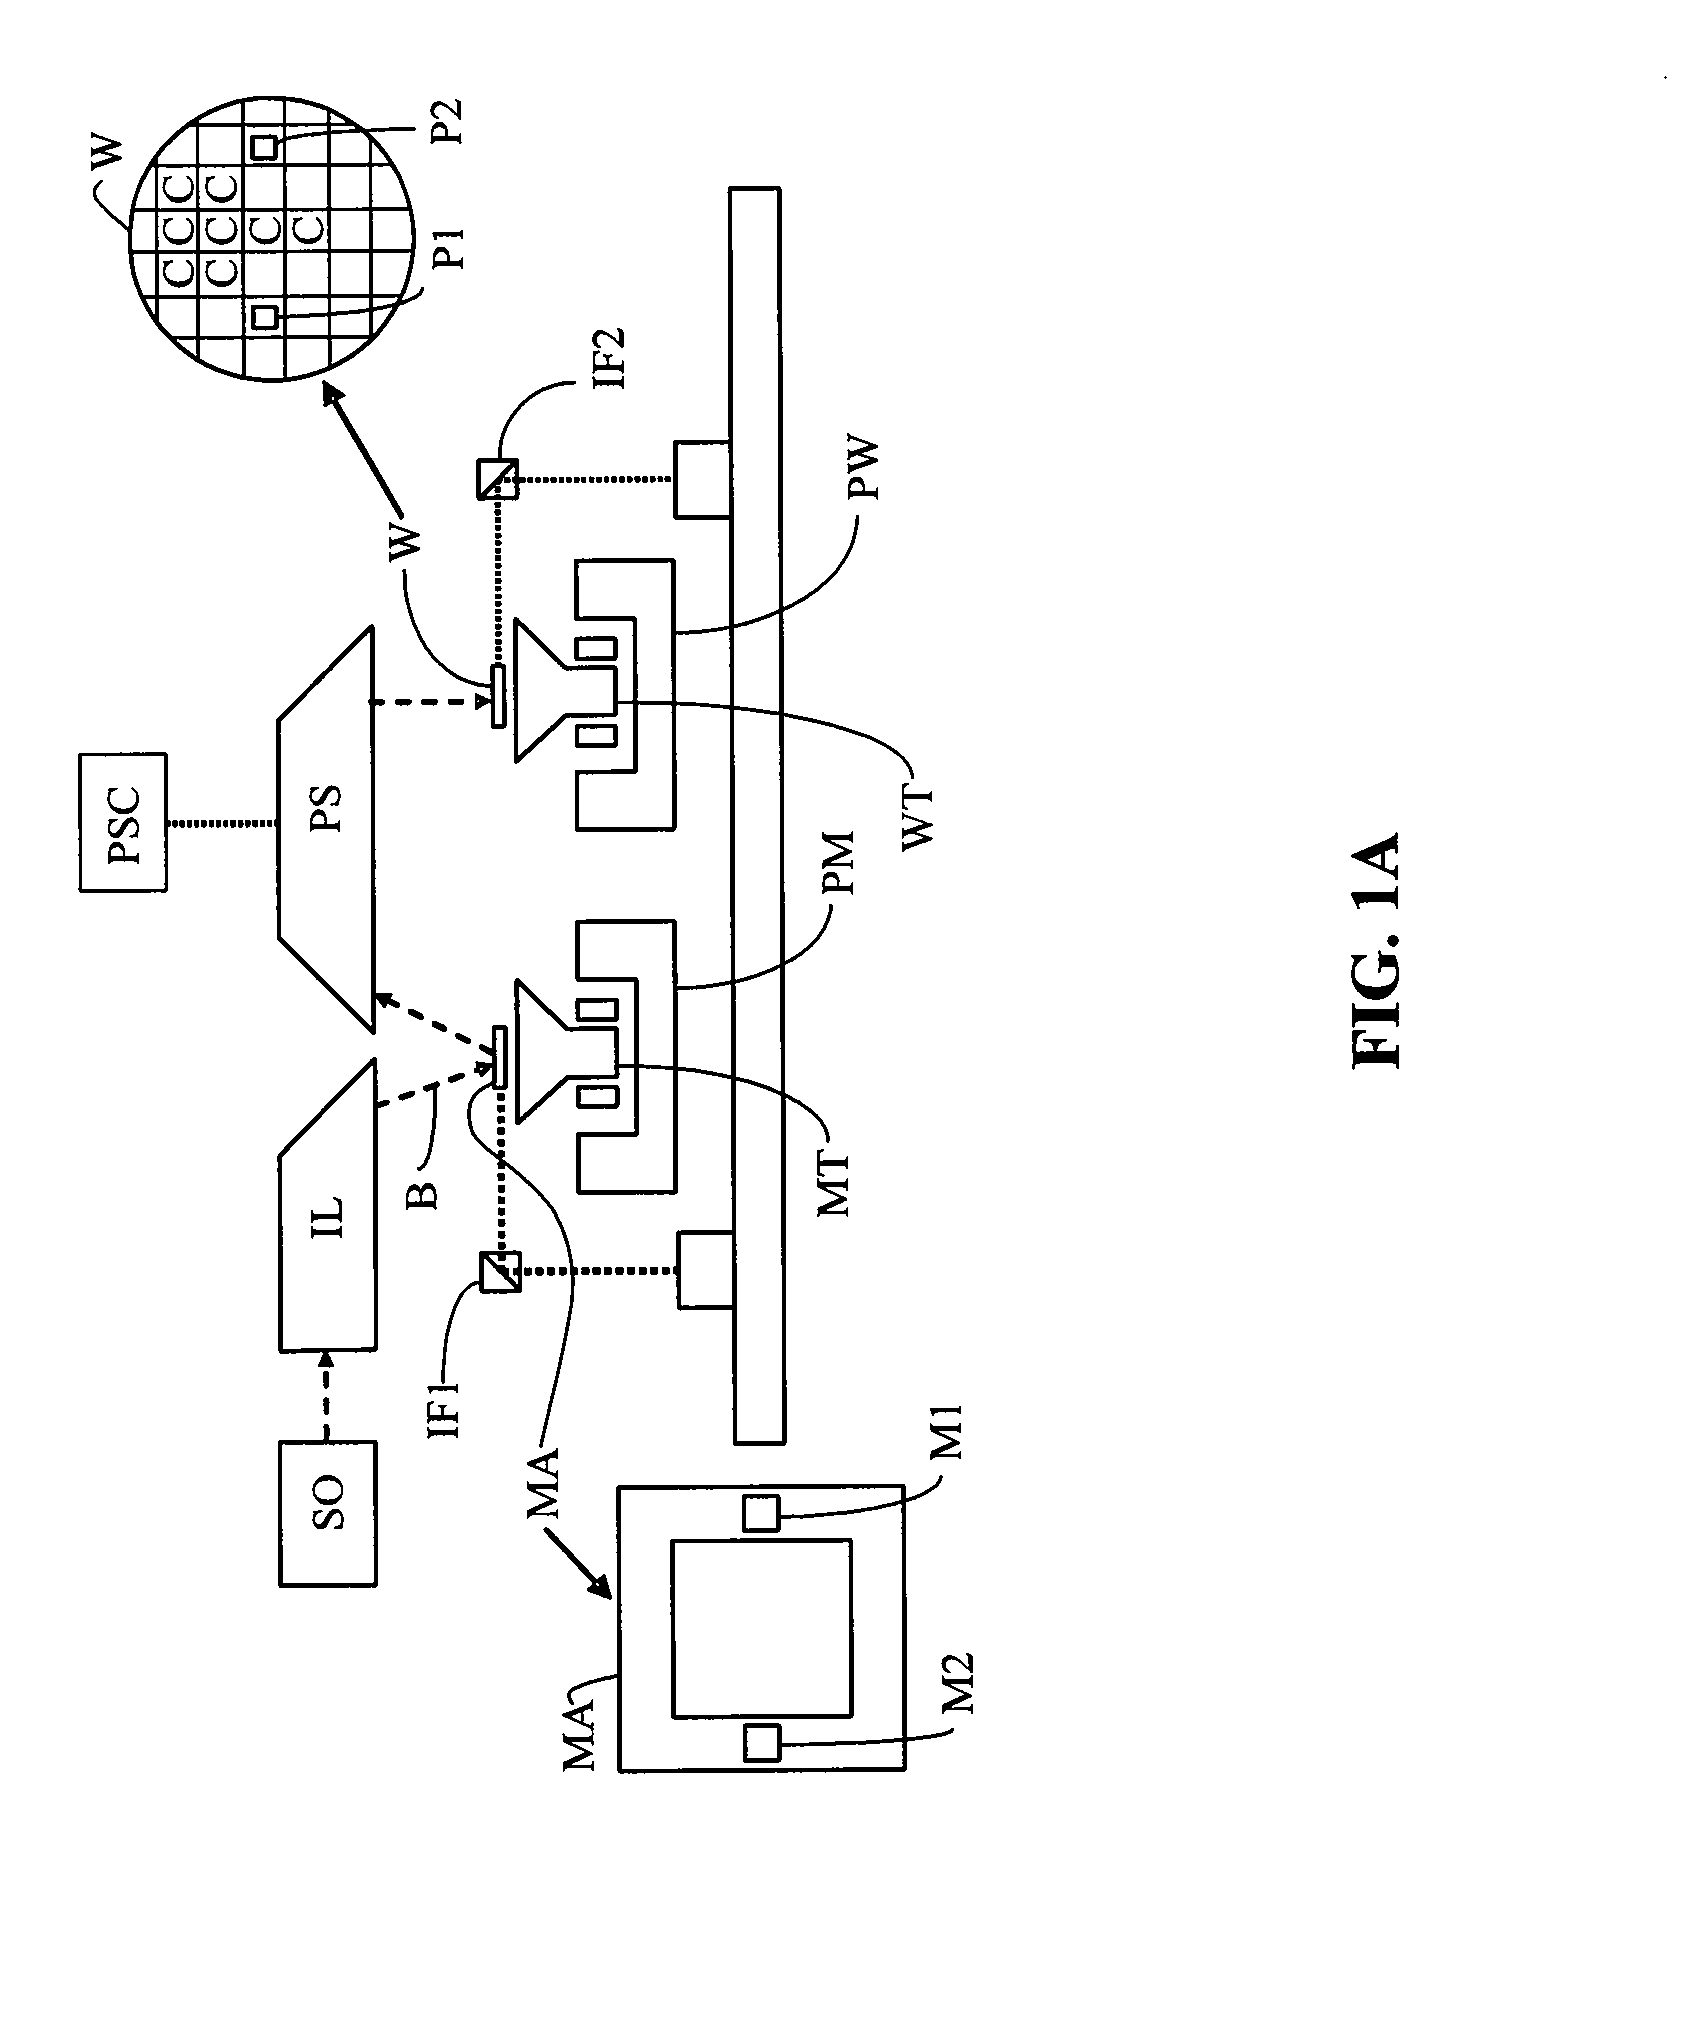 Actuator System Using Multiple Piezoelectric Actuators